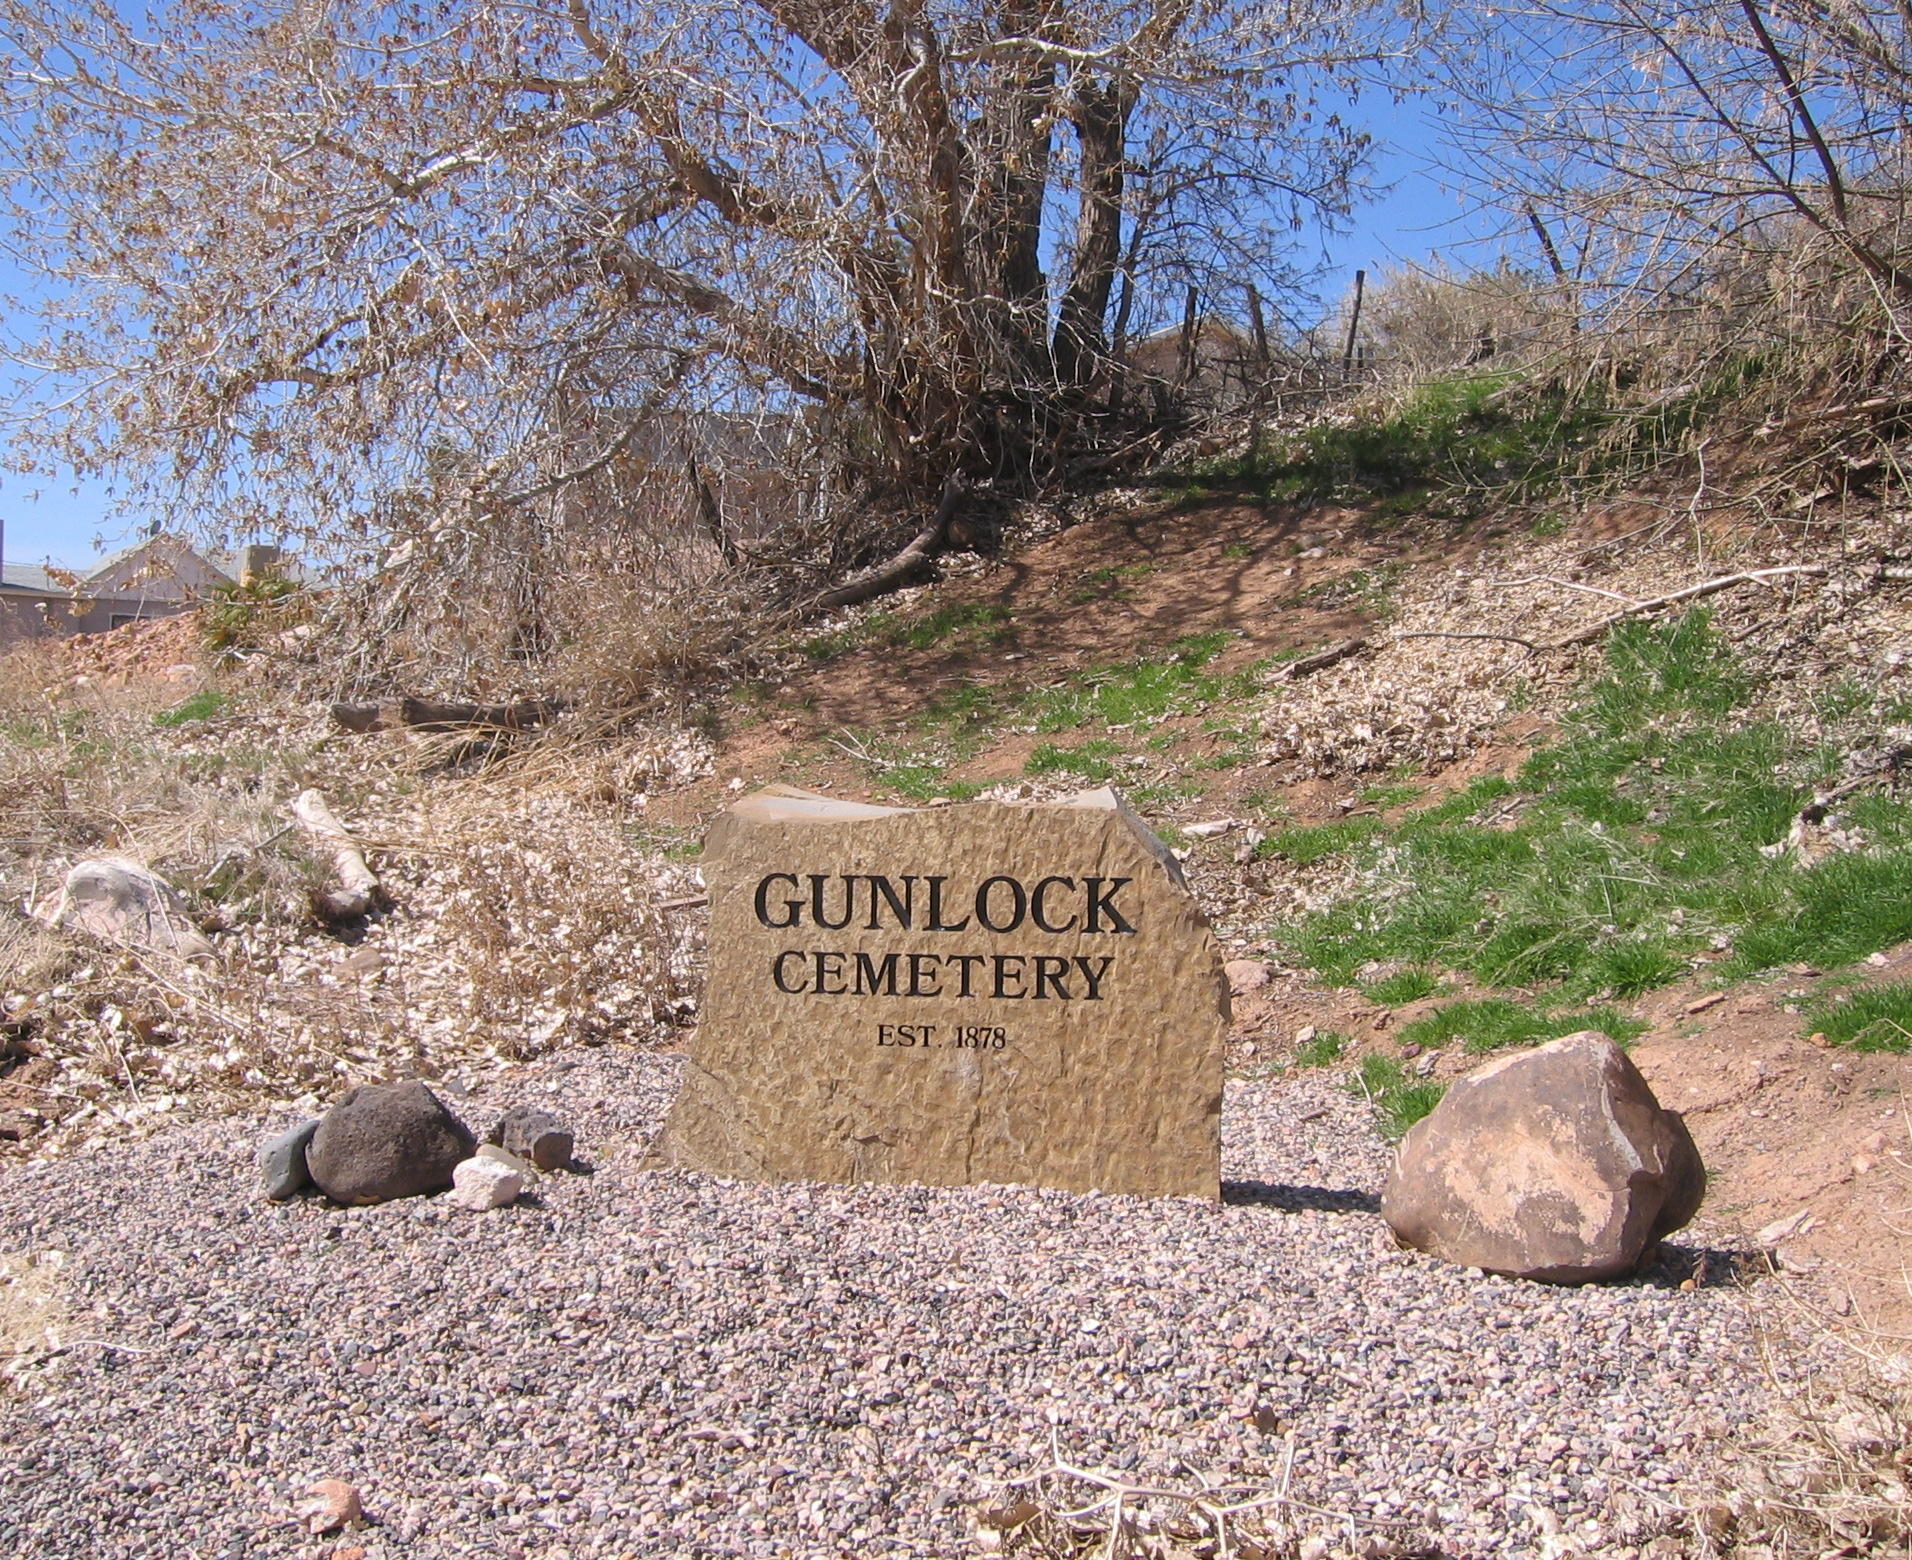 Gunlock Cemetery sign